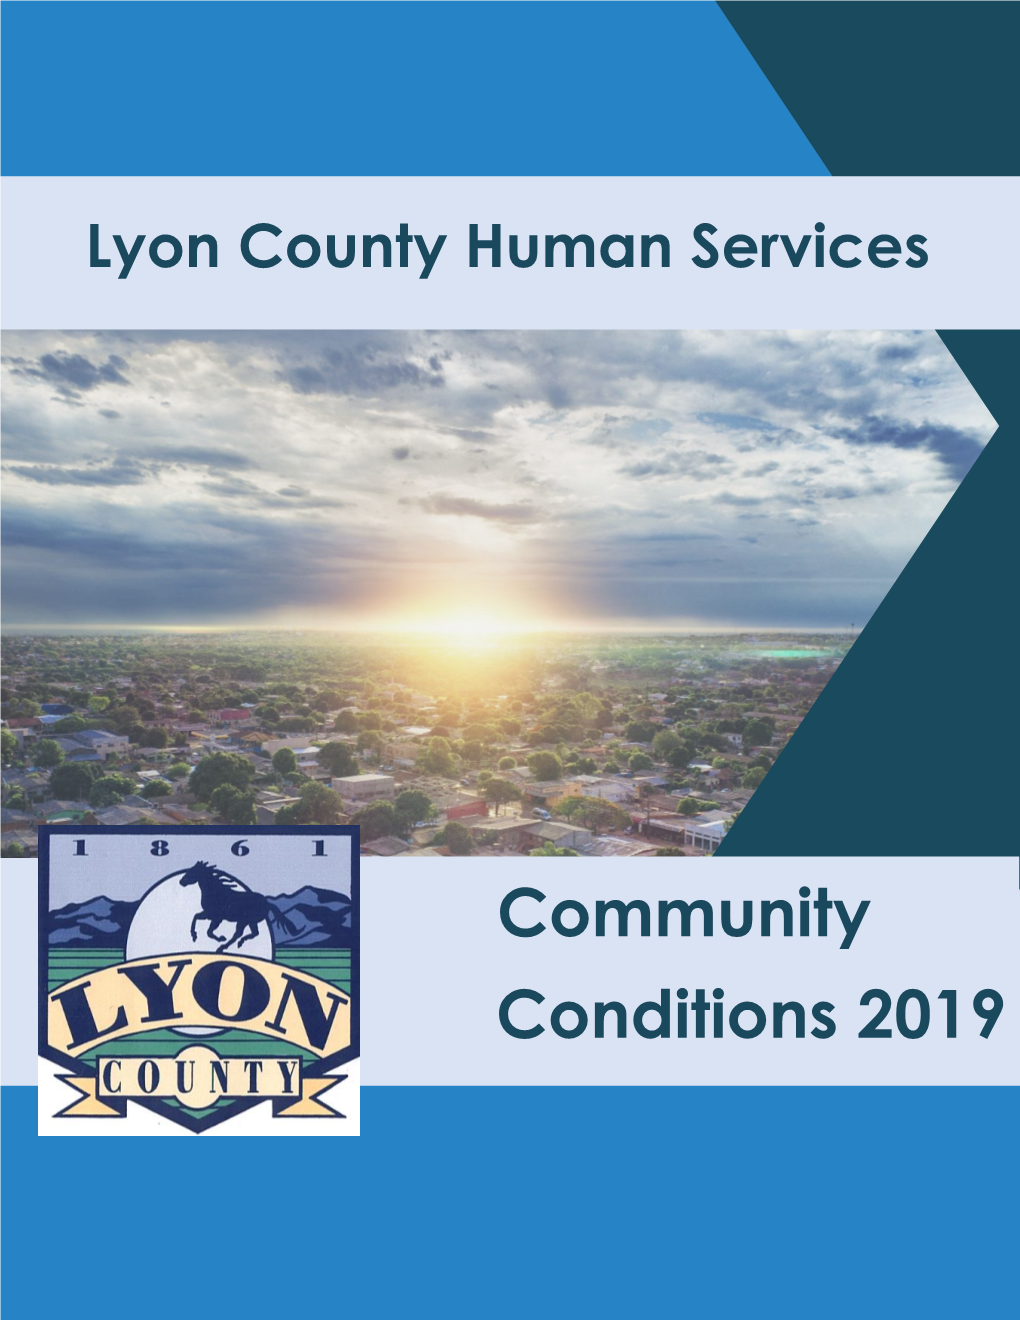 Lyon County Community Conditions 2019